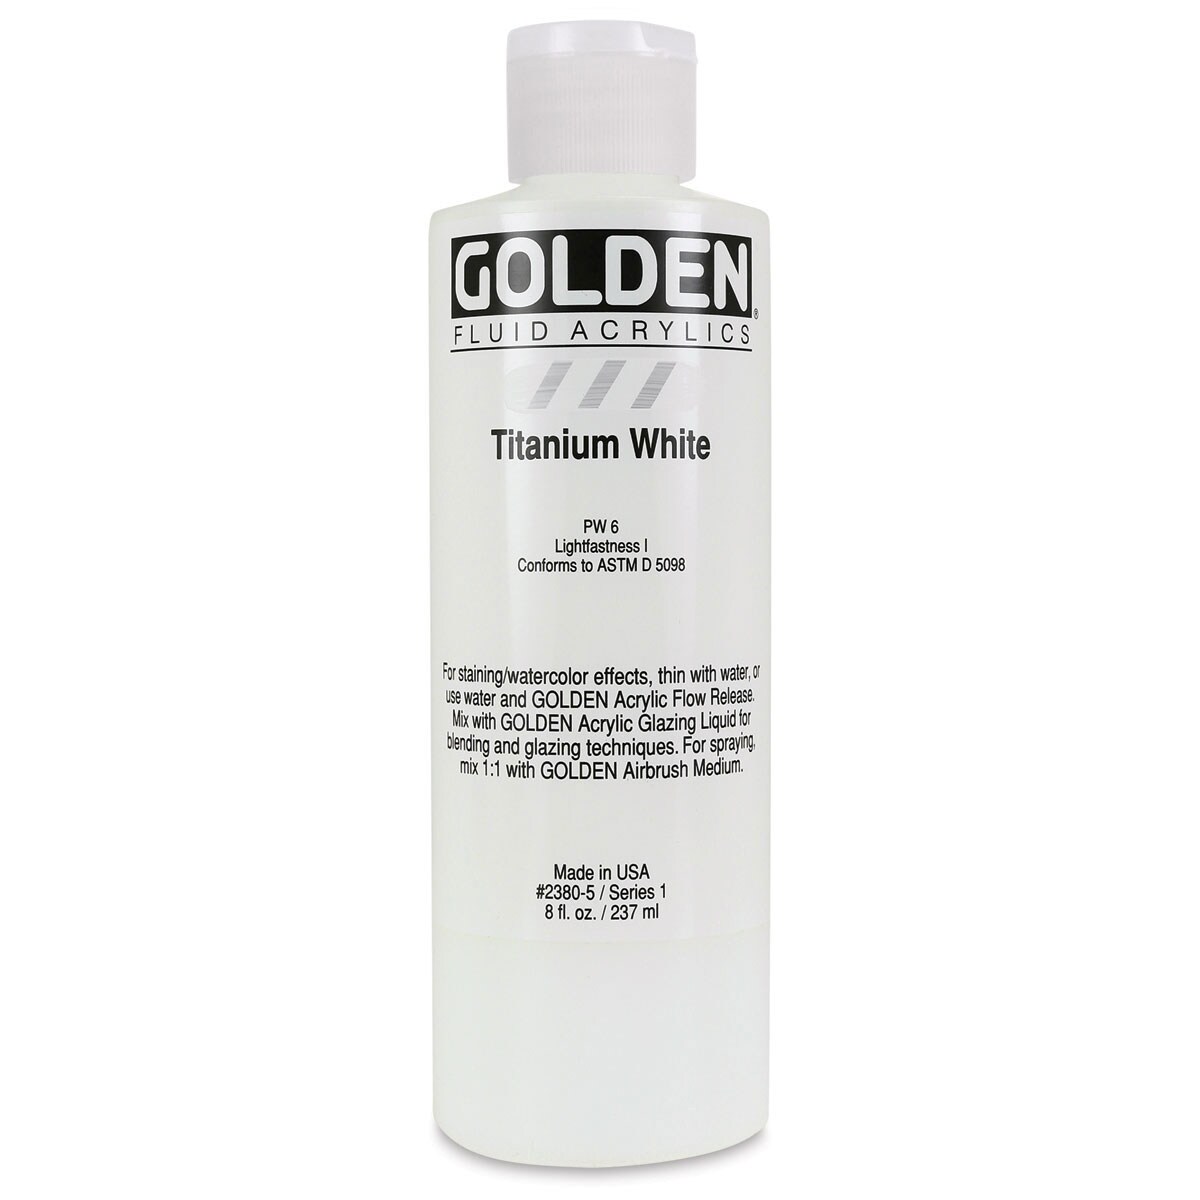 Golden Fluid Acrylics - Titanium White, 8 oz bottle